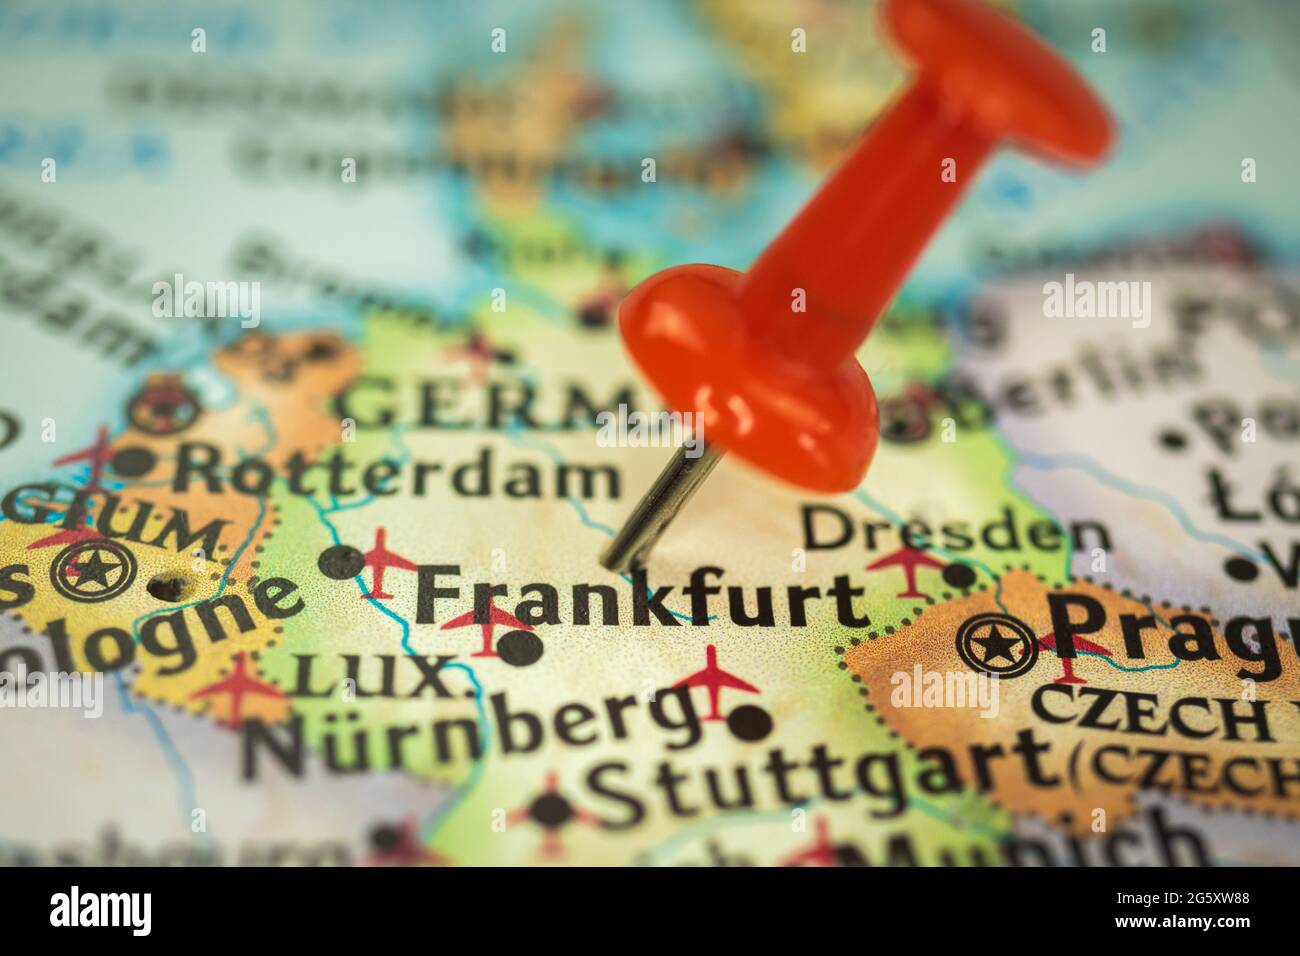 Location Franfurt in Germany, push pin on map closeup, marker of ...